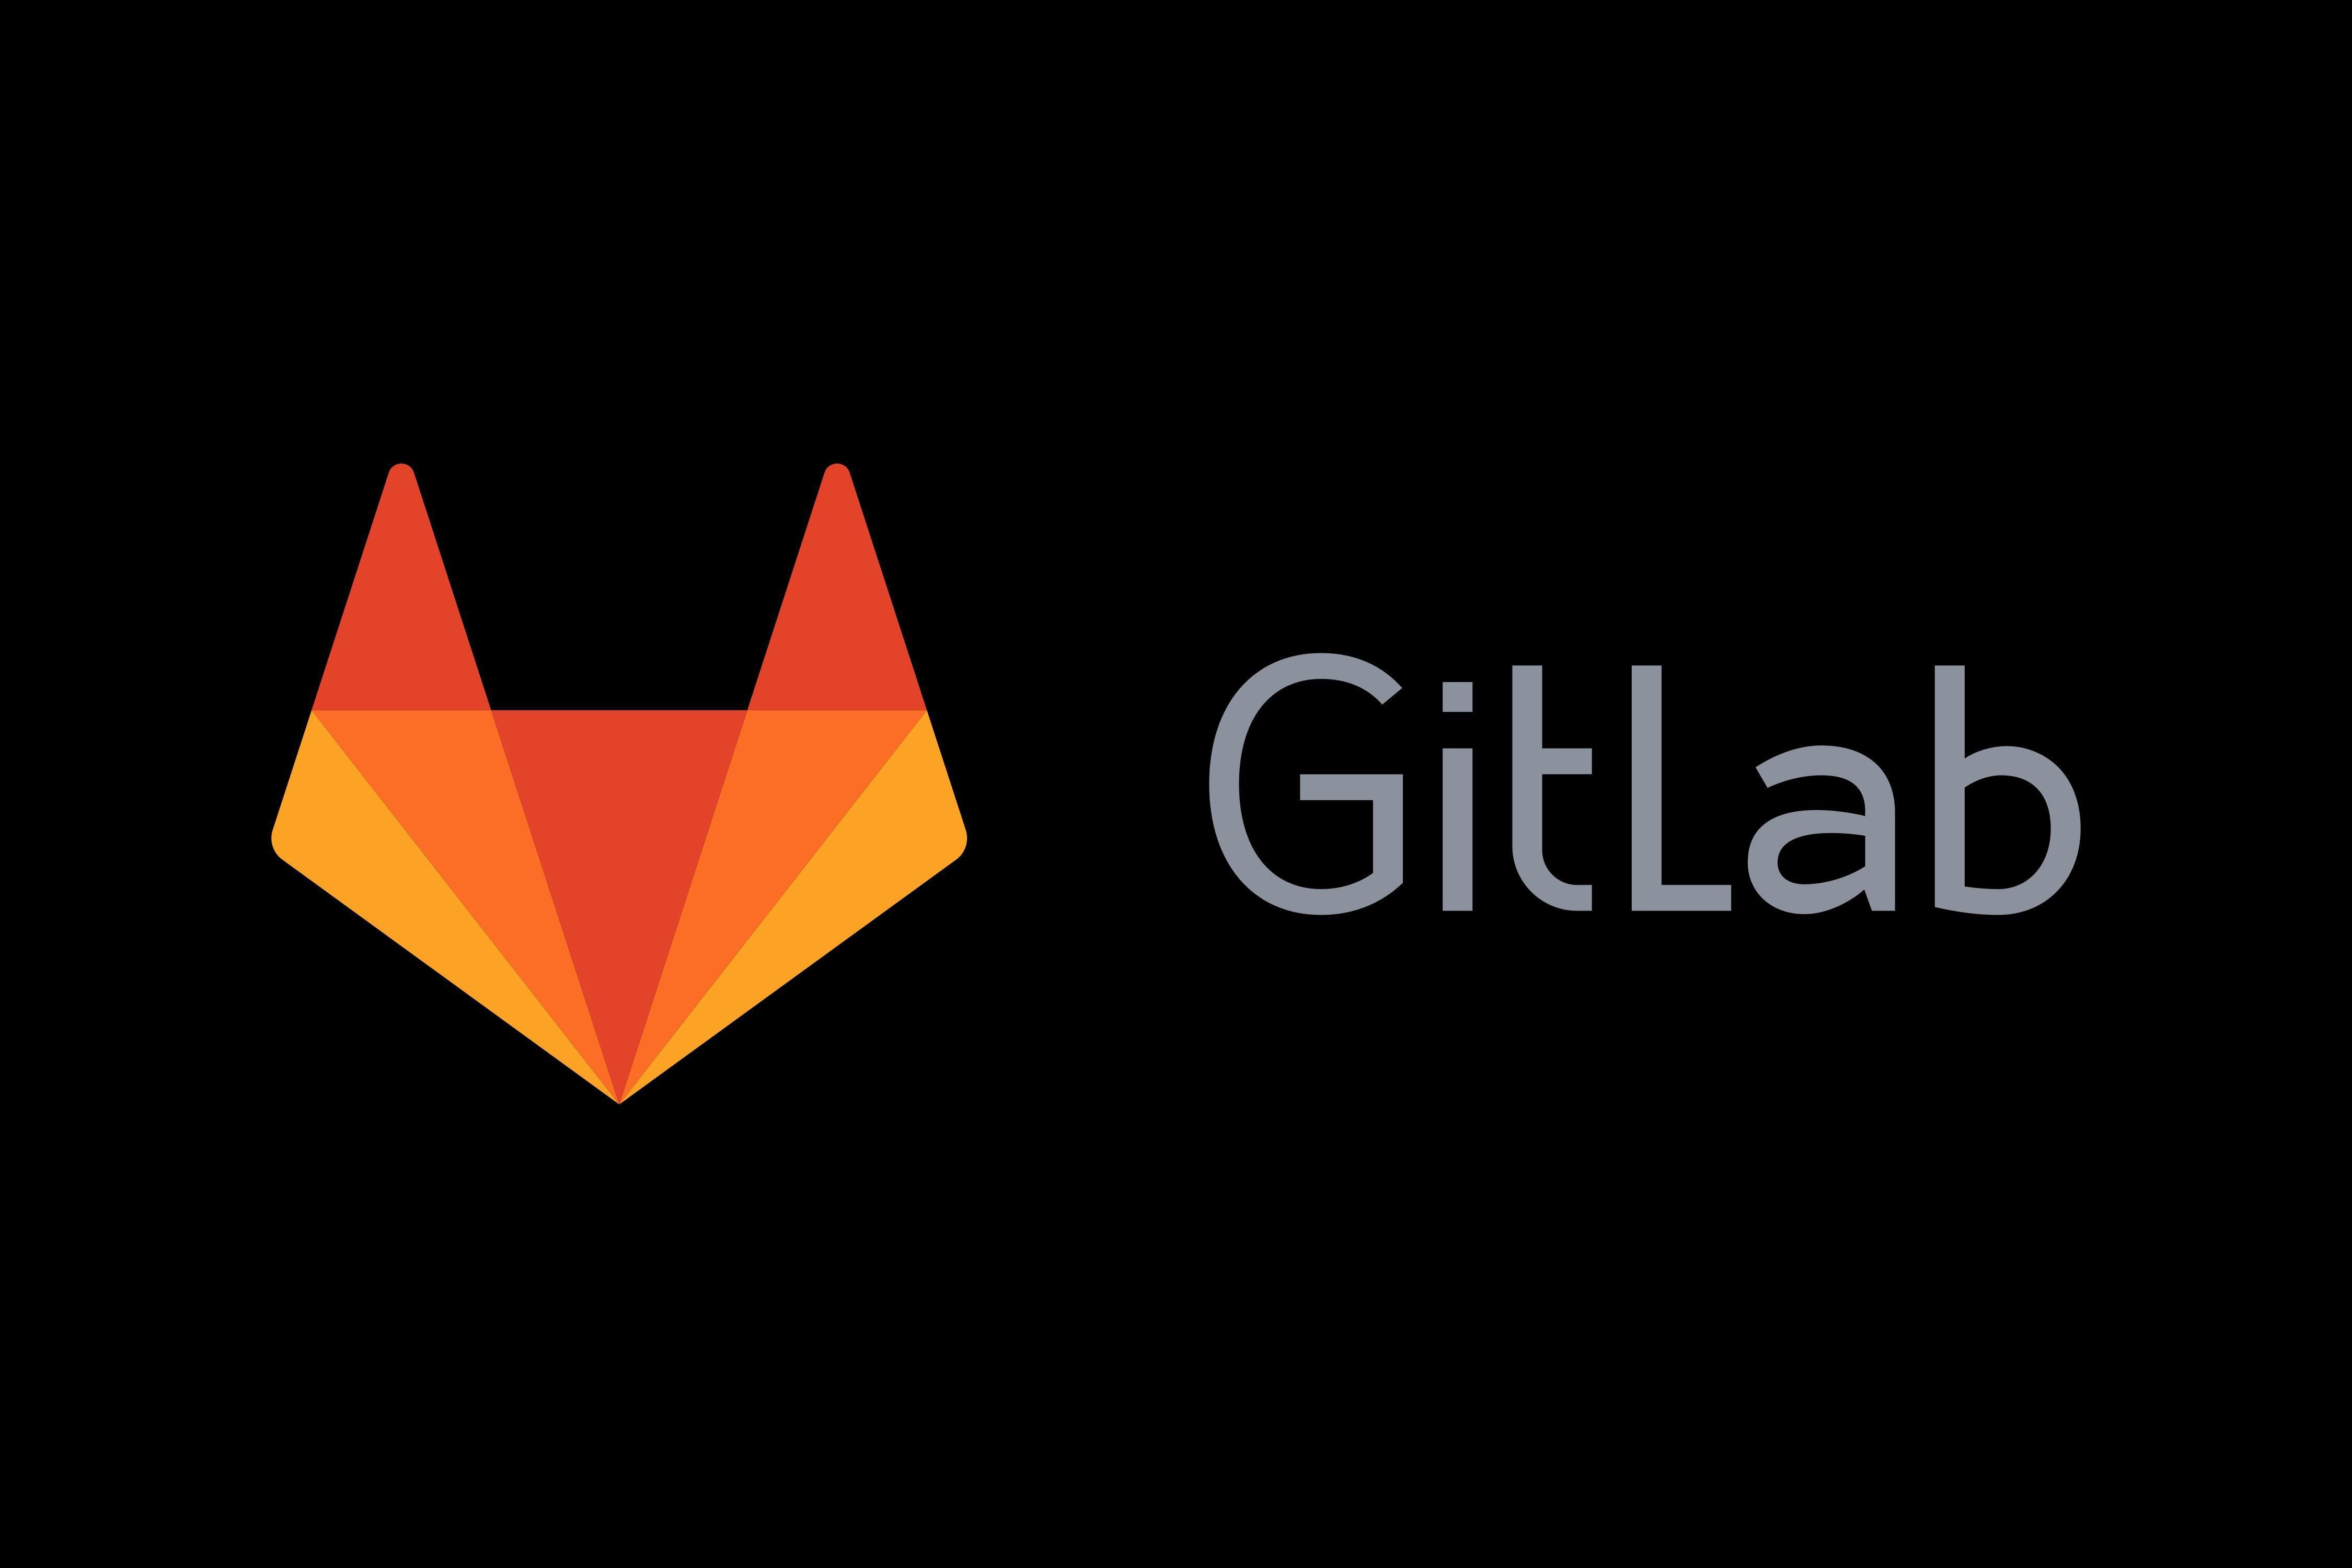 GitLab Releases Updates to Address Critical Vulnerabilities